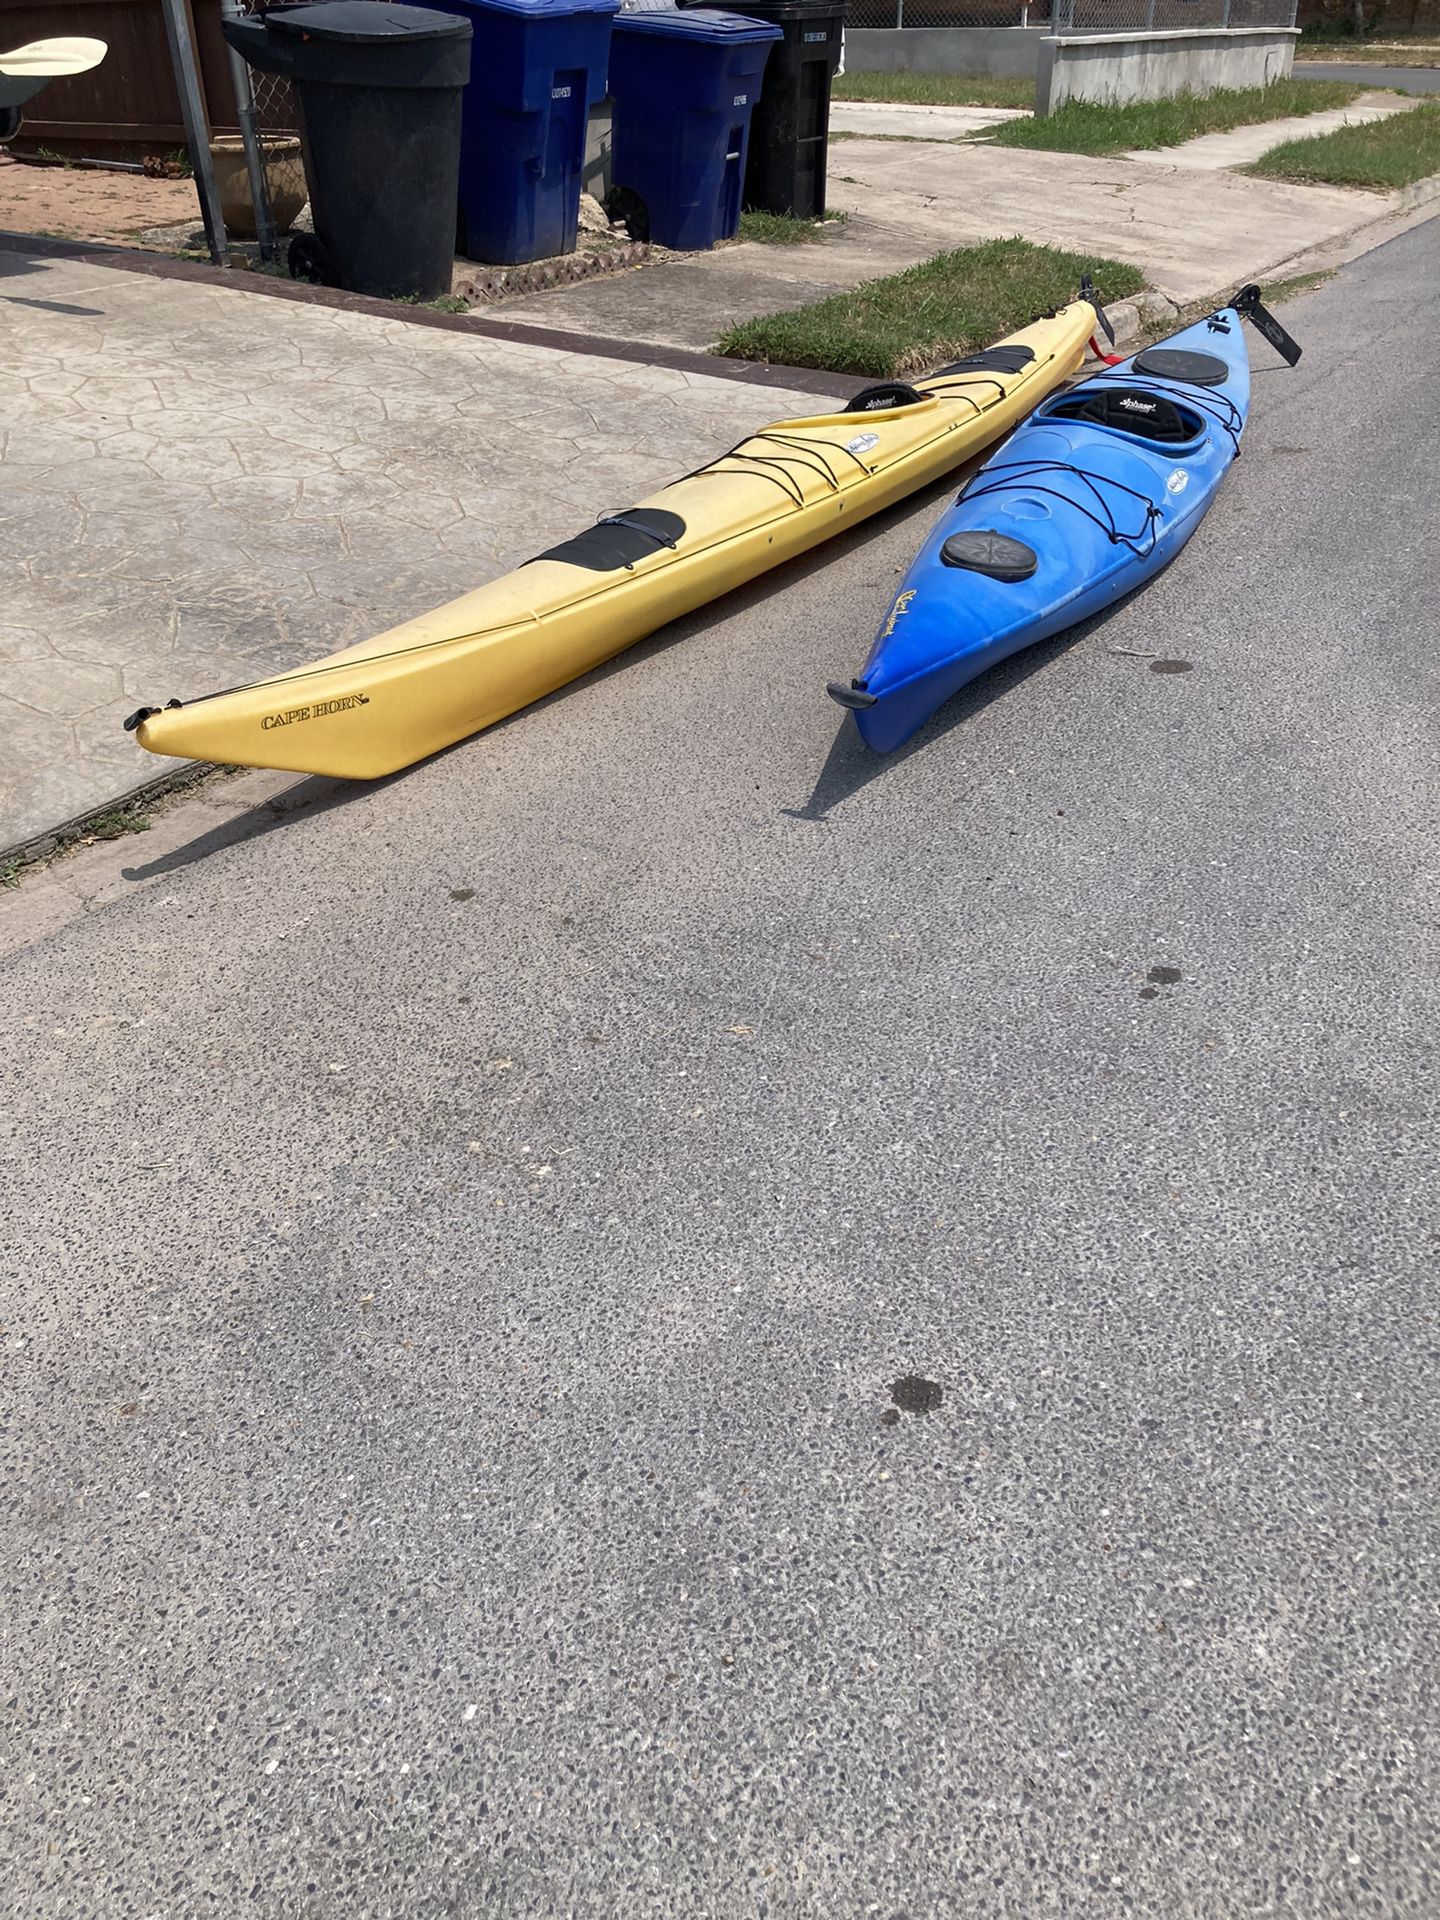 2- Great Large High Speed Kayaks $250 Each